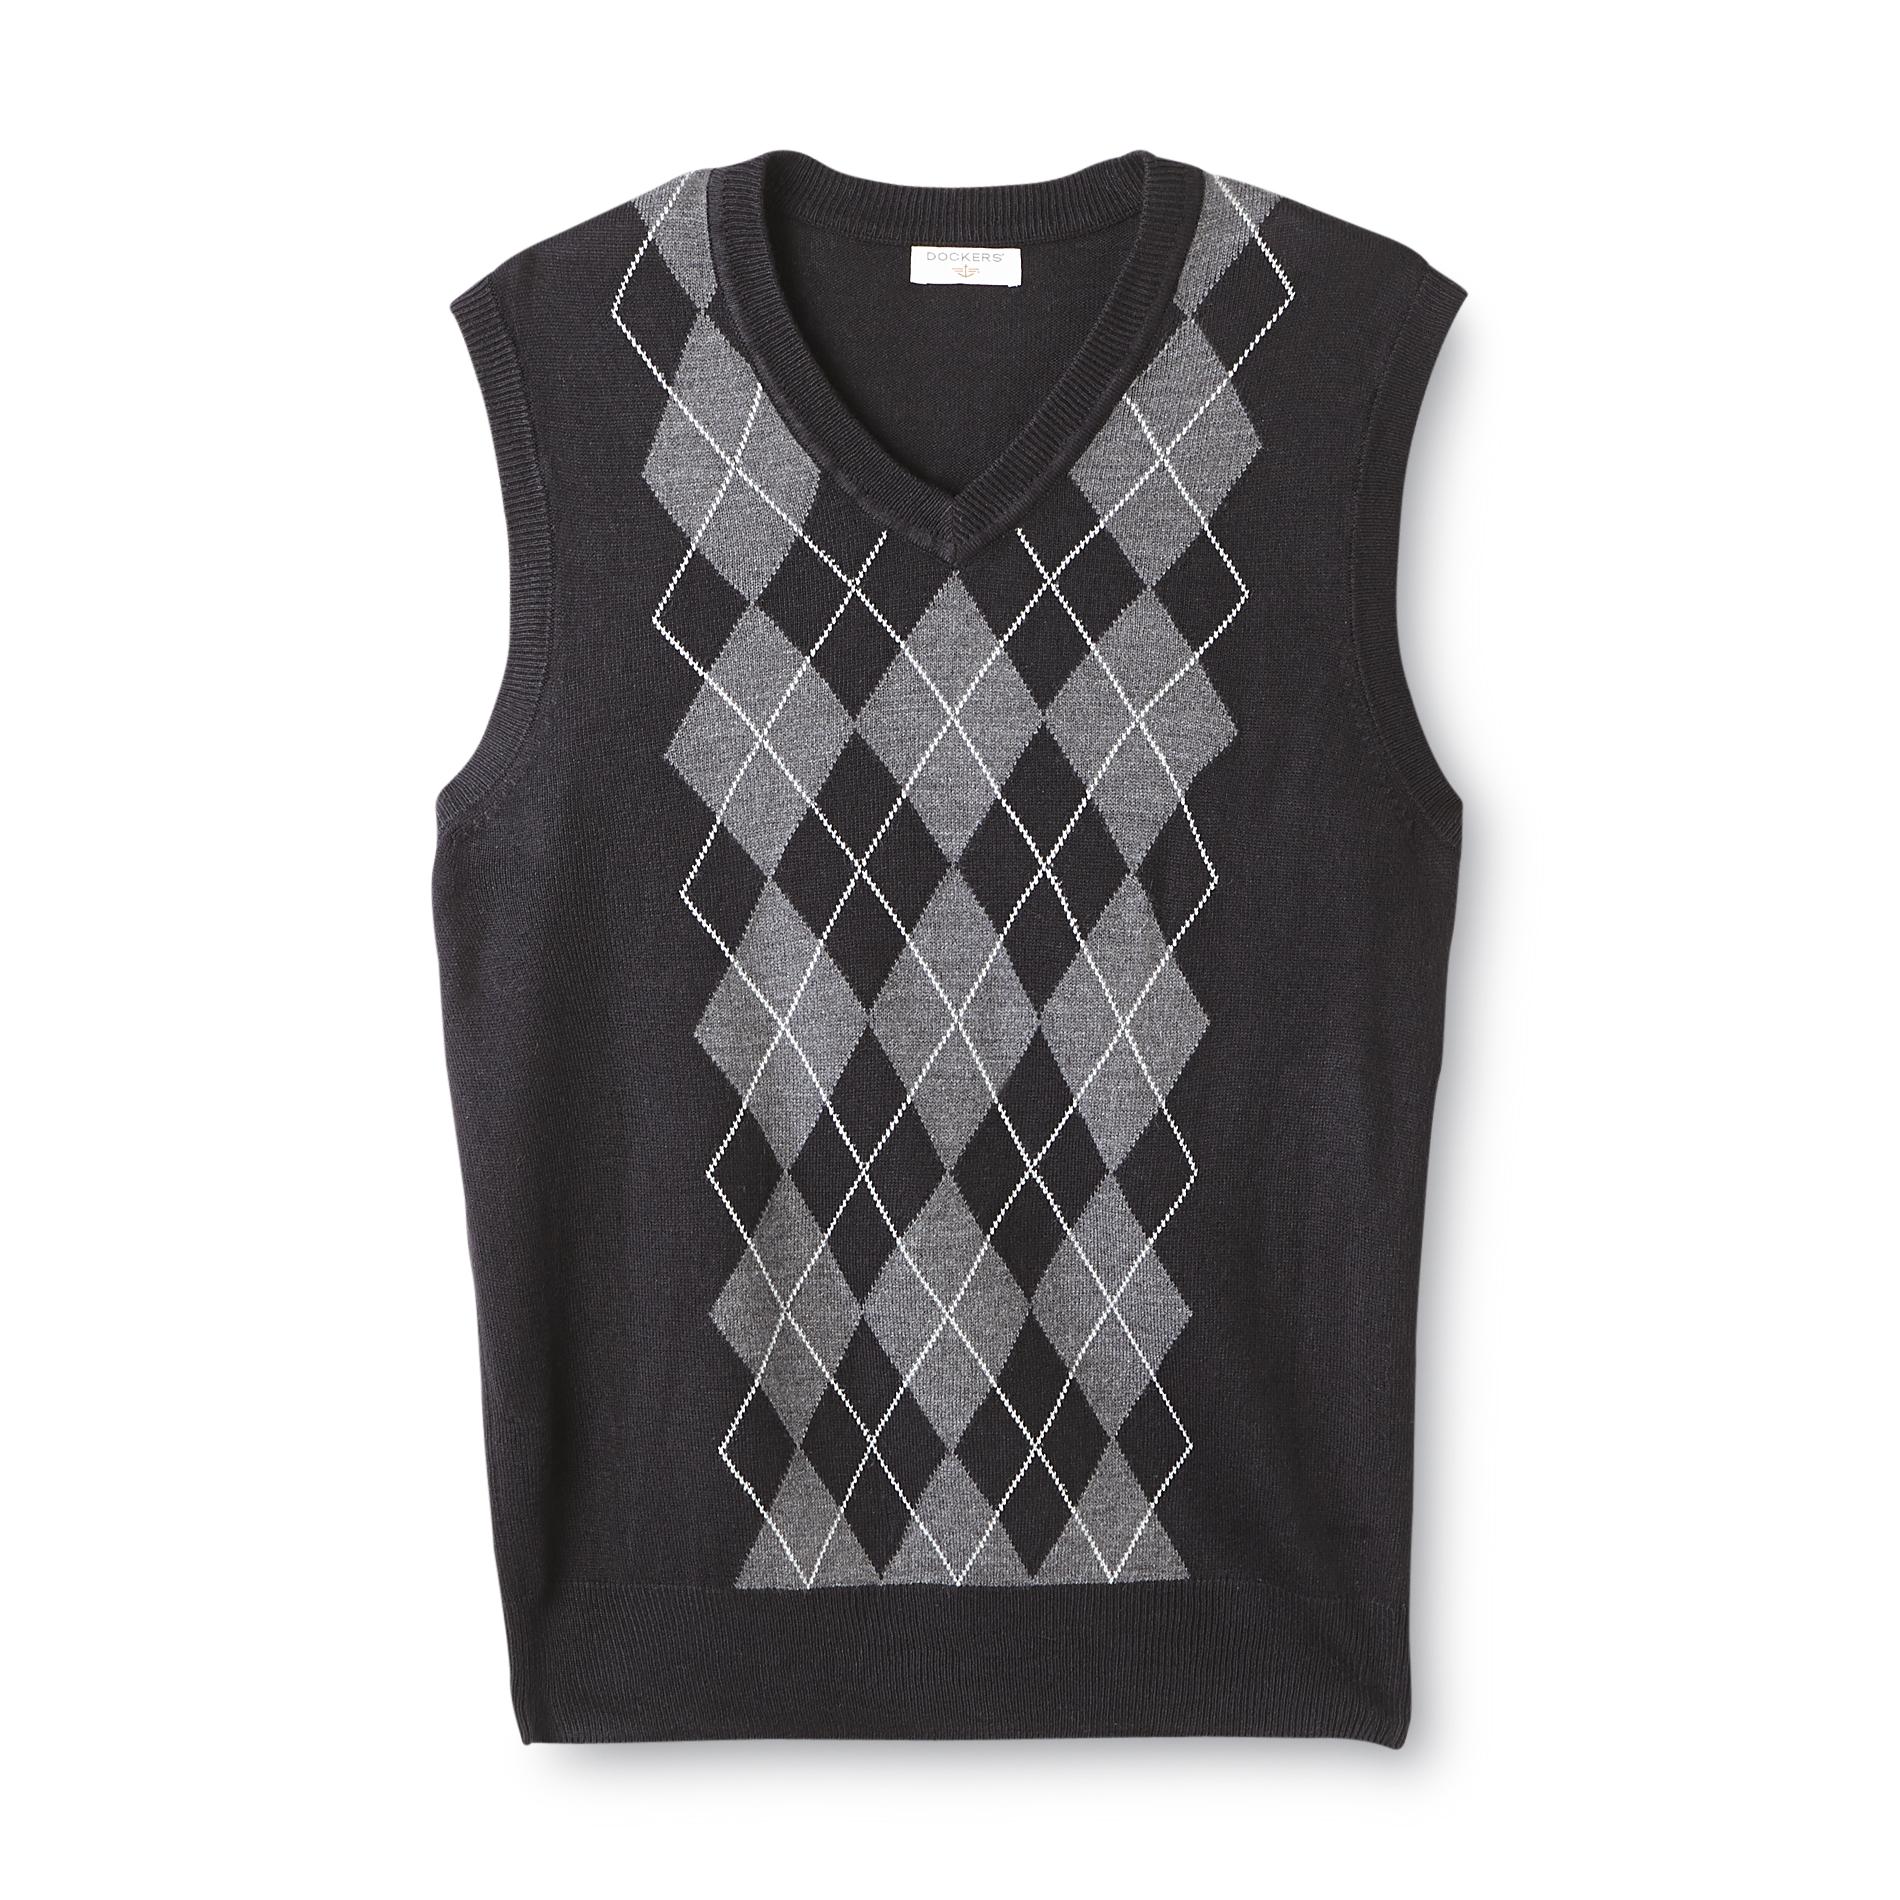 Dockers Men's Big & Tall Soft Touch Sweater Vest - Argyle